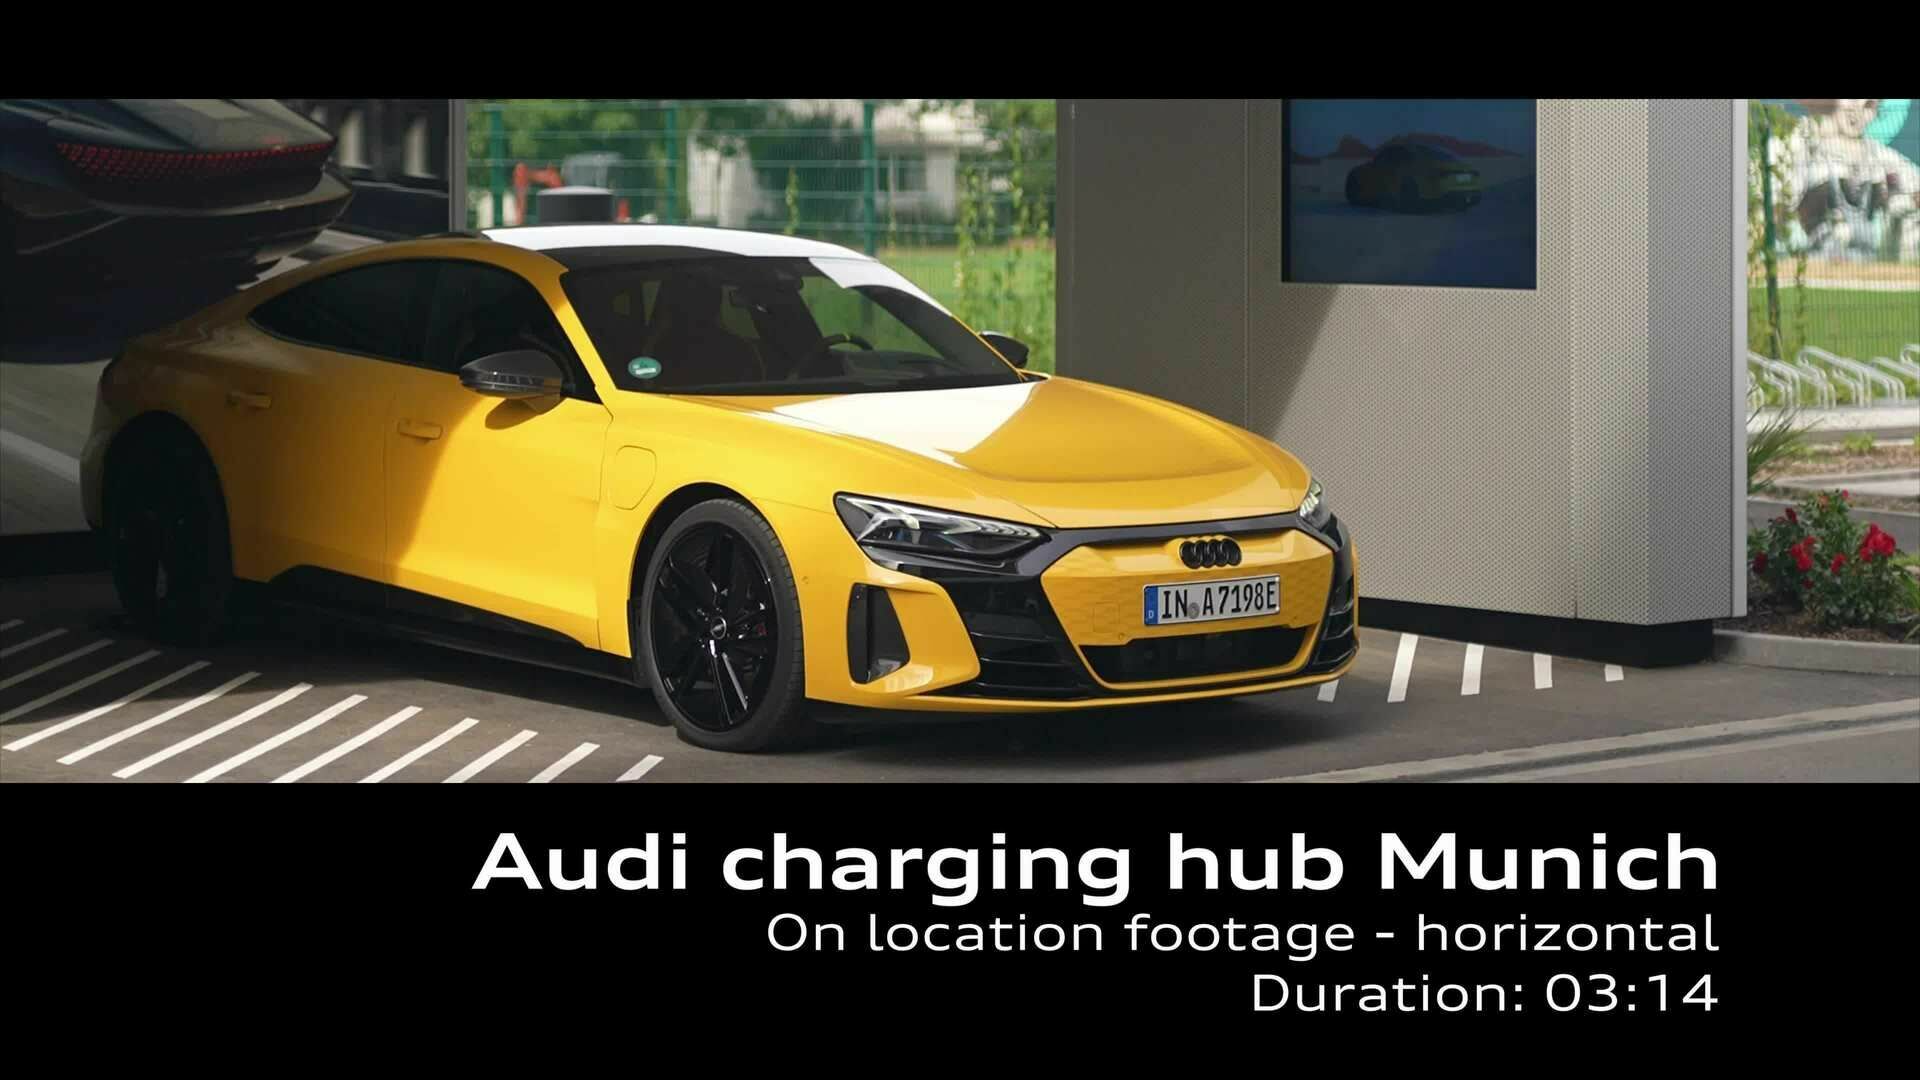 Footage: Audi charging hub München (horizontal)